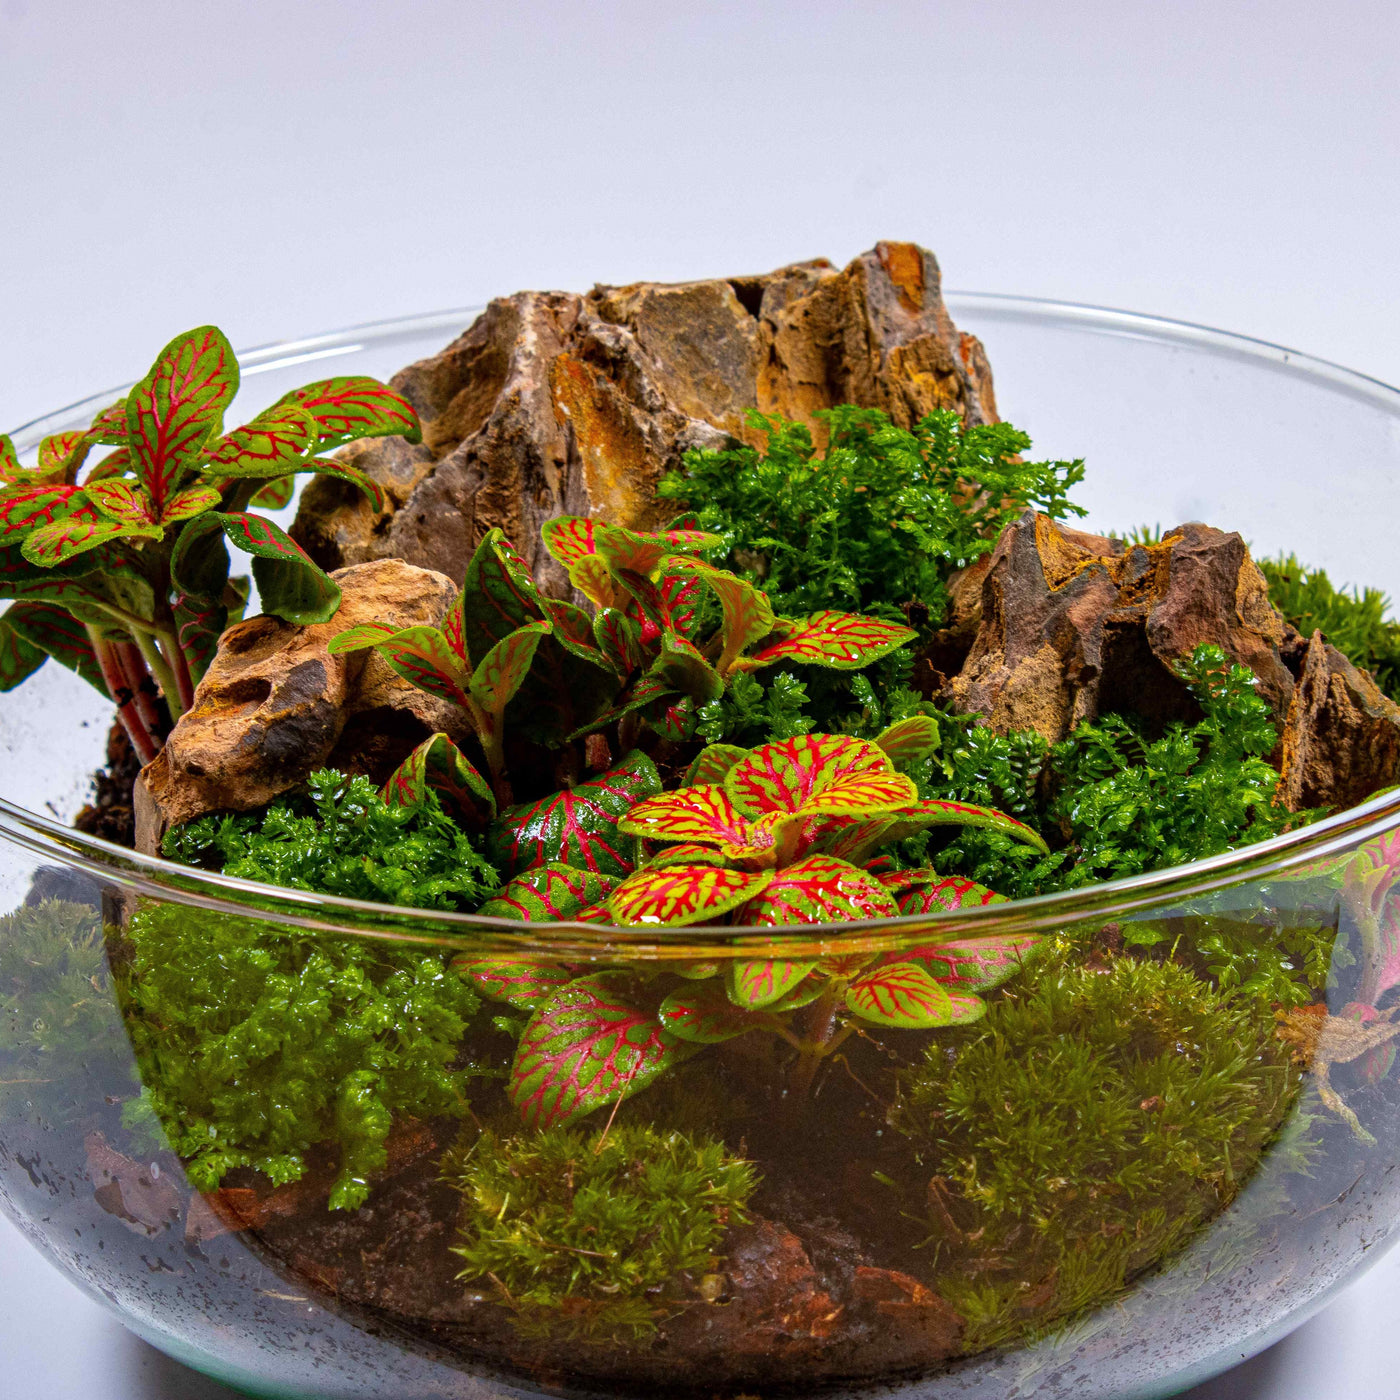 DIY orb moss terrarium kit with decorative stone 